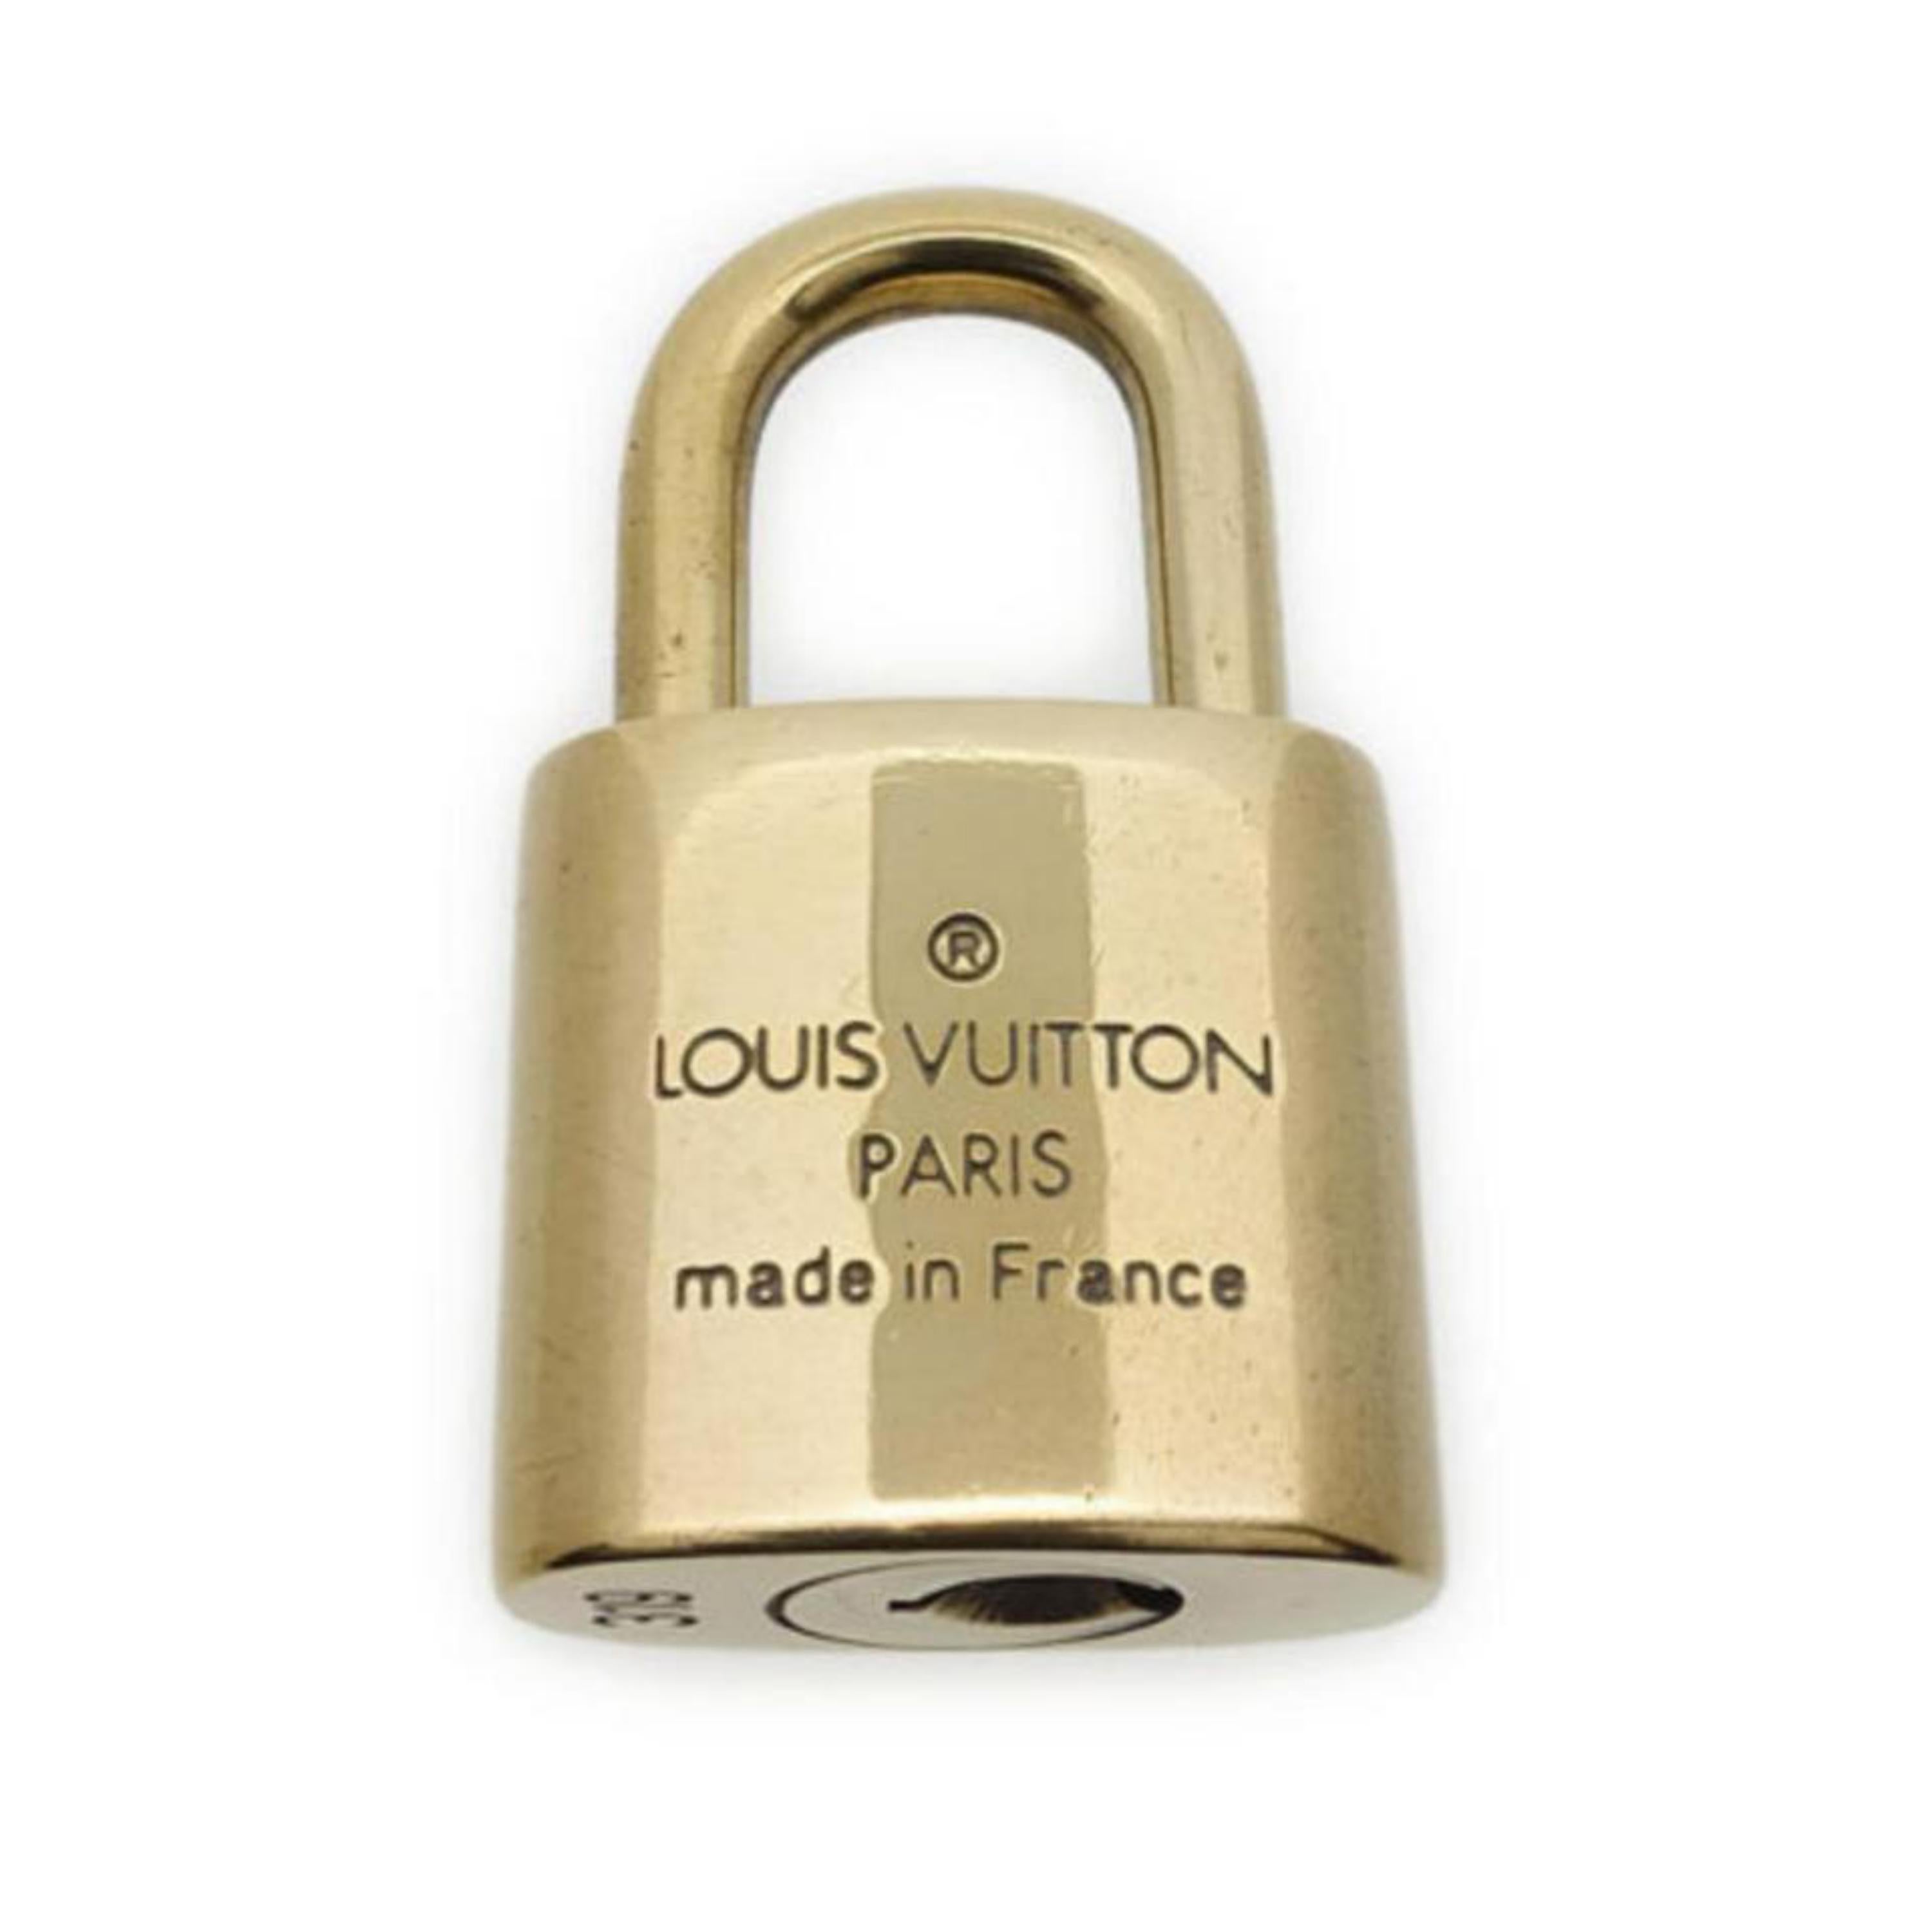 Louis Vuitton Gold Single Key Lock Pad Lock and Key 867565 8